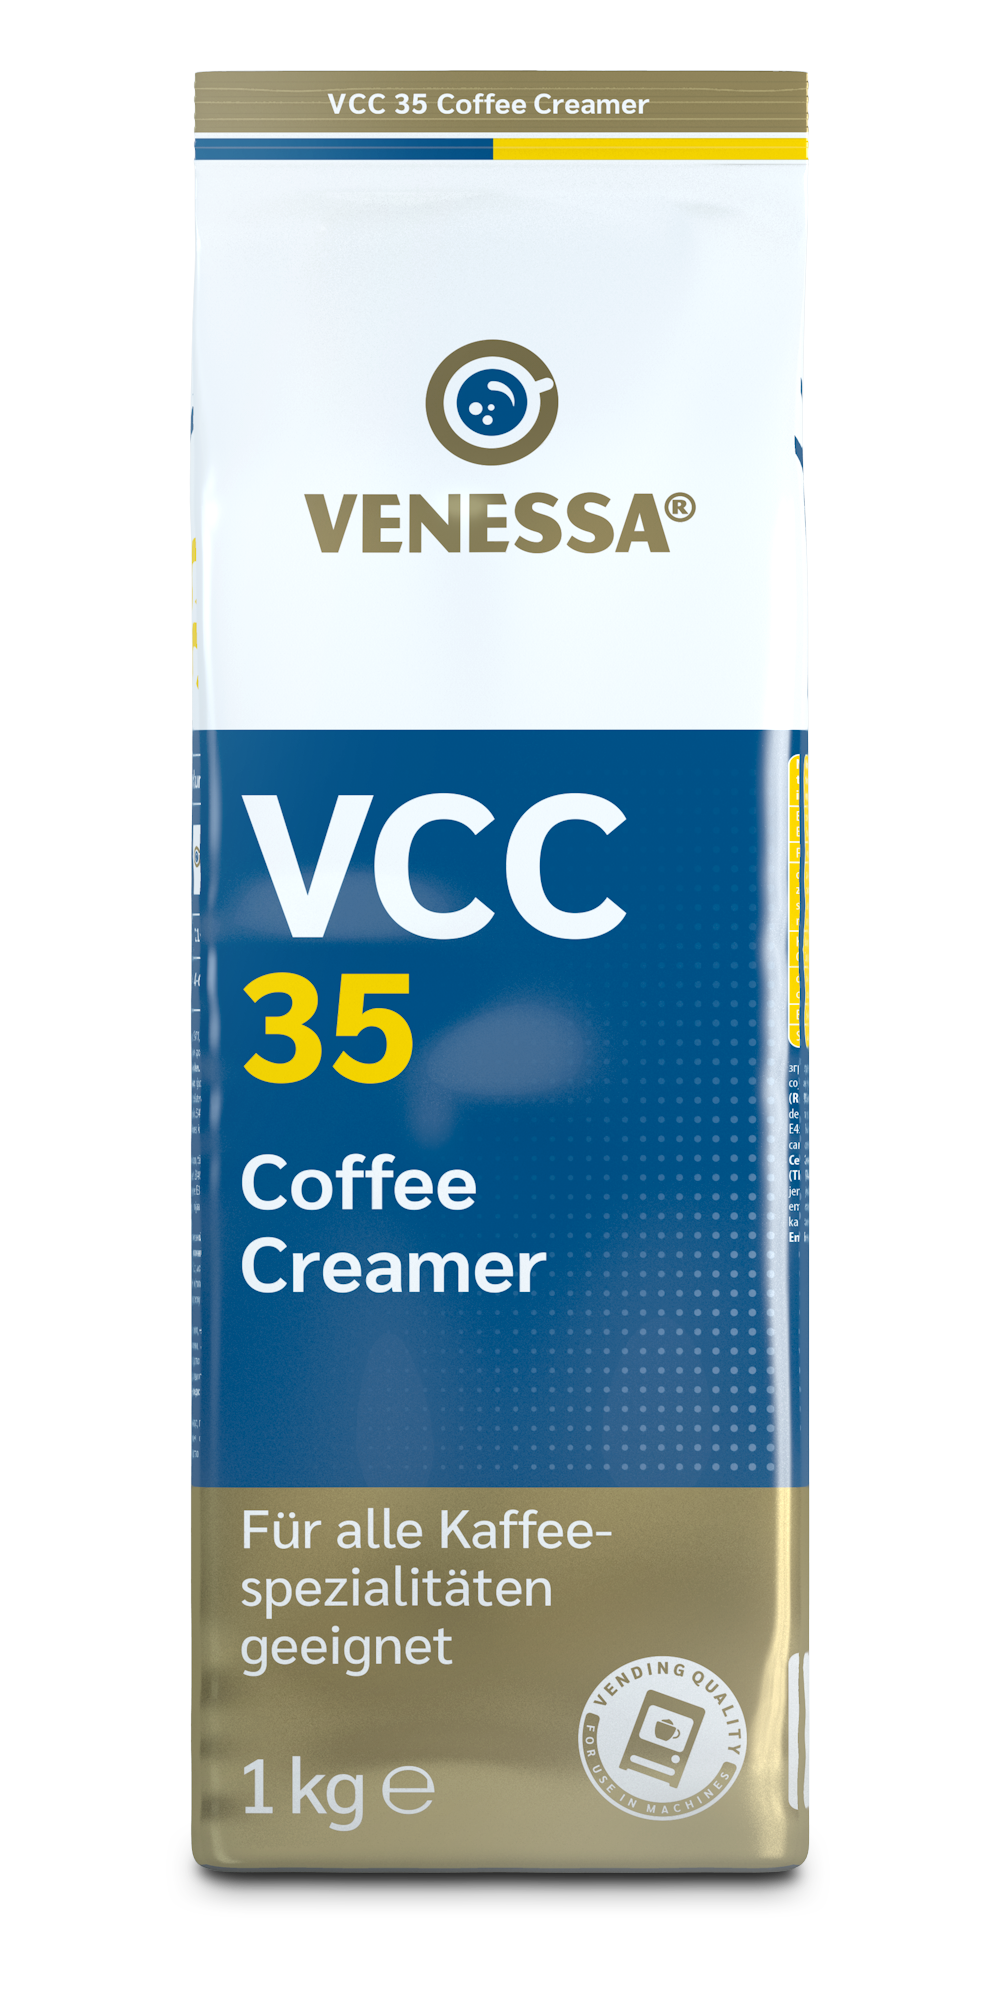 Coffee Creamer 10 x 1kg VENESSA VCC 35 Kaffeeweißer 